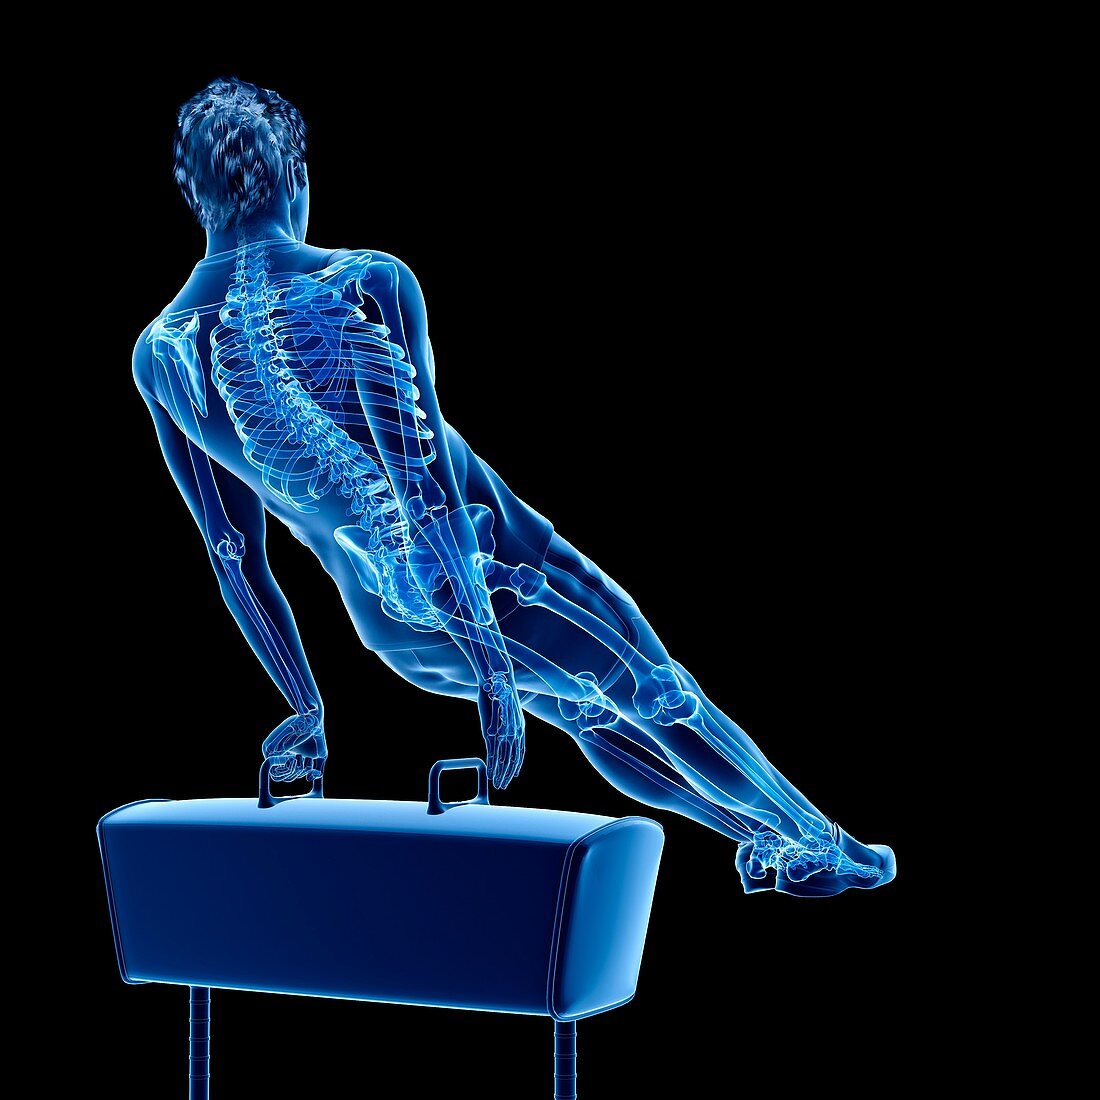 Gymnast's skeleton, illustration